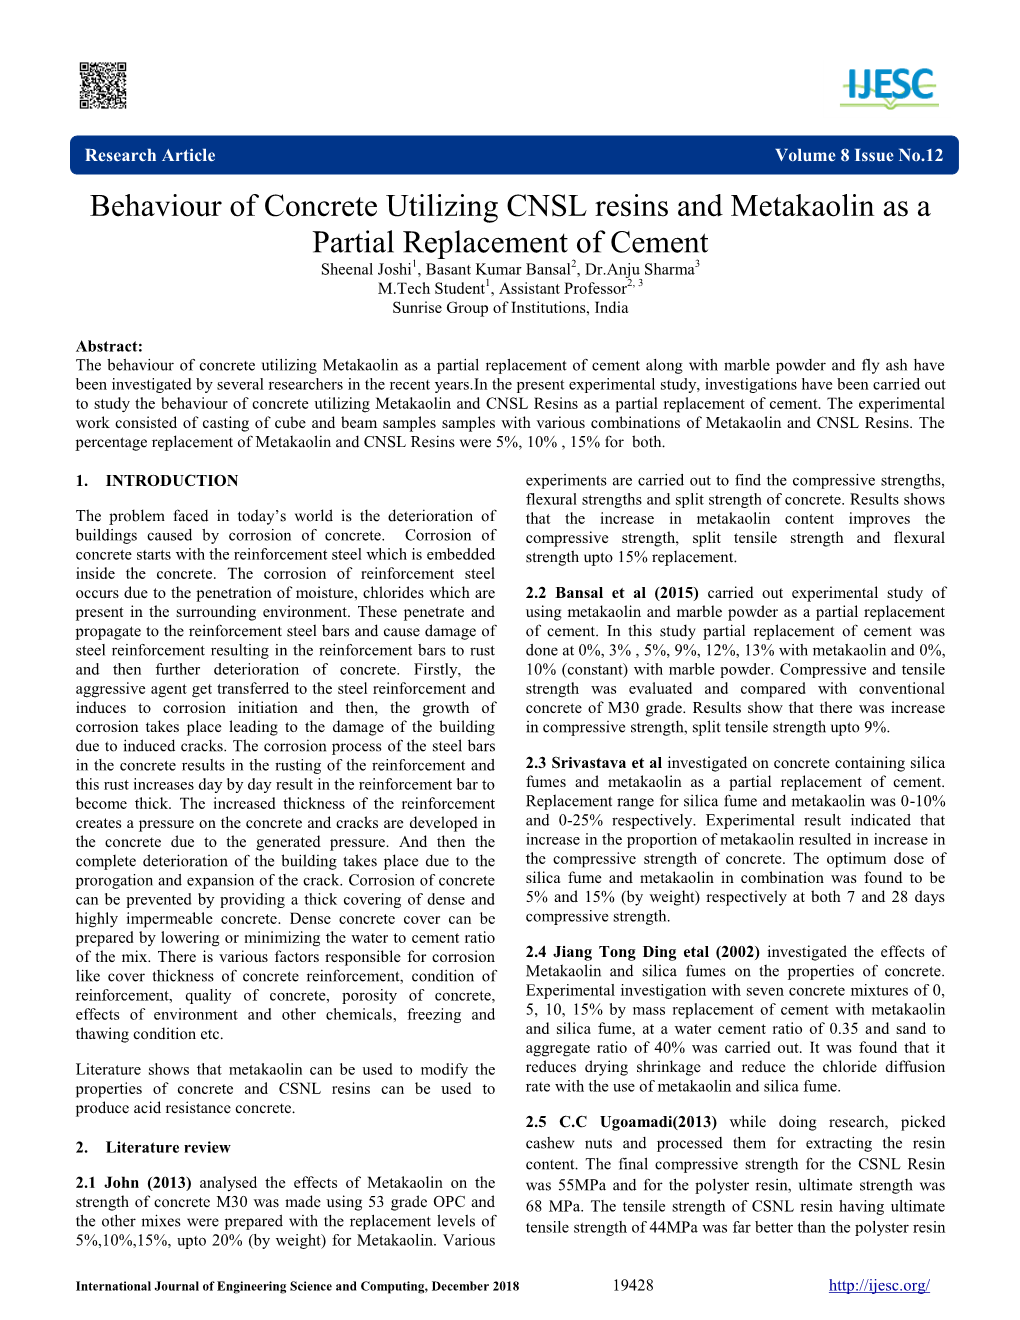 Behaviour of Concrete Utilizing CNSL Resins and Metakaolin As a Partial